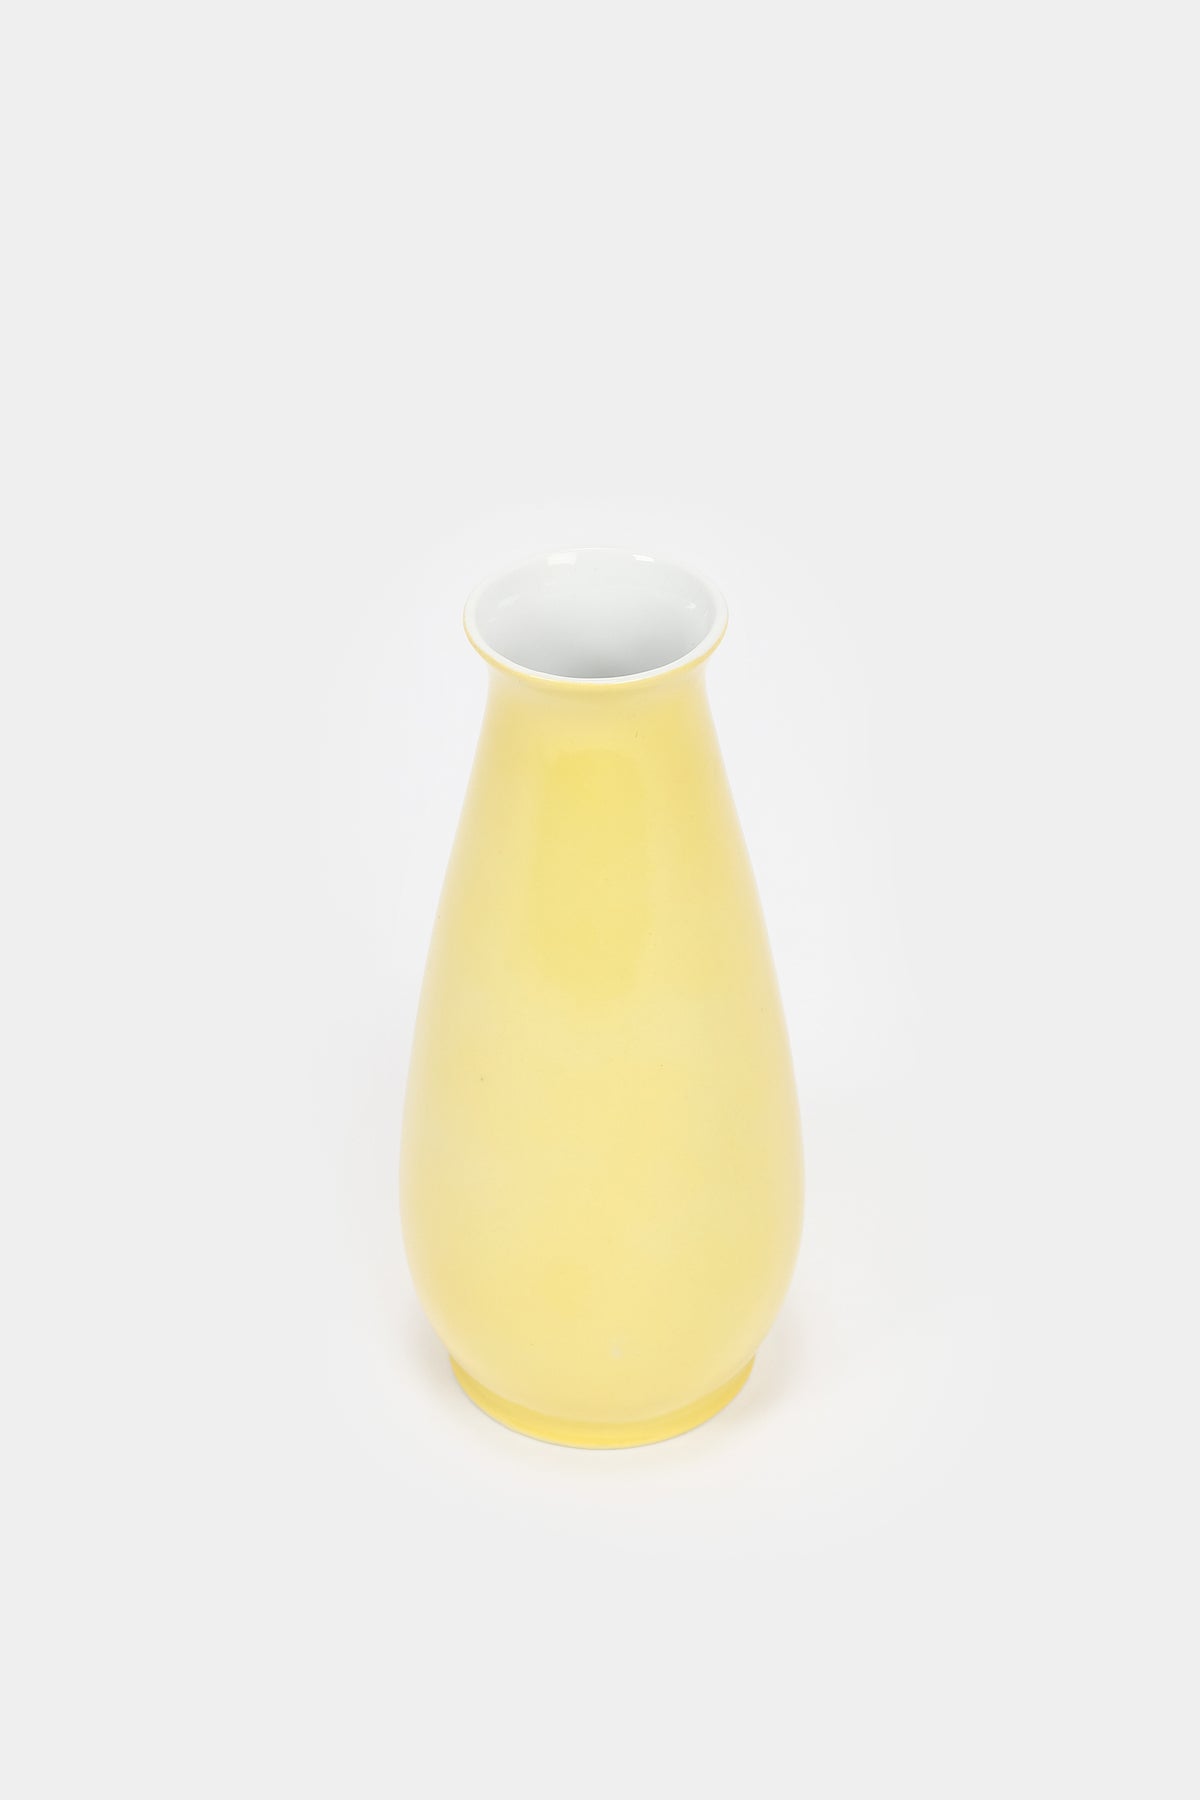 Porzellan Vase, Langenthal, 30er